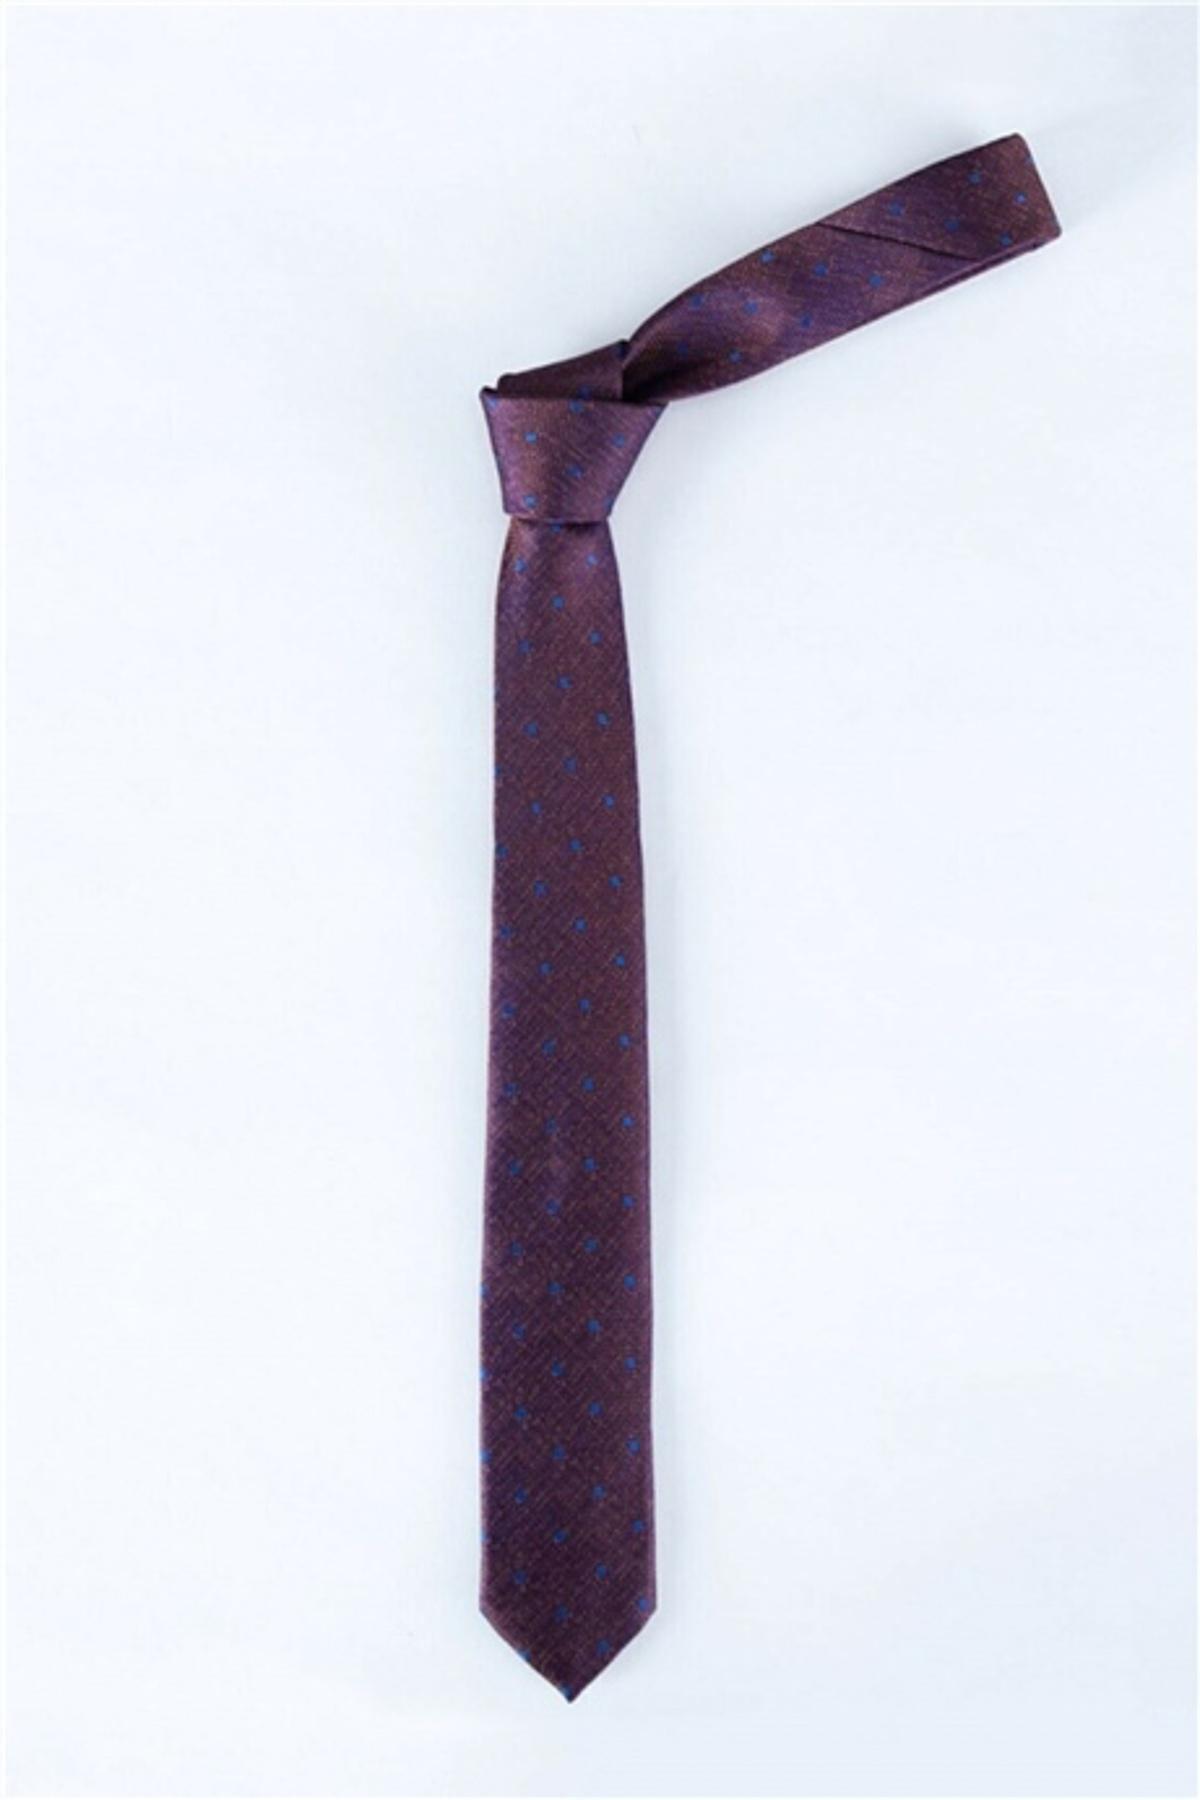 Selected image for TUDORS Uža kravata smeđa